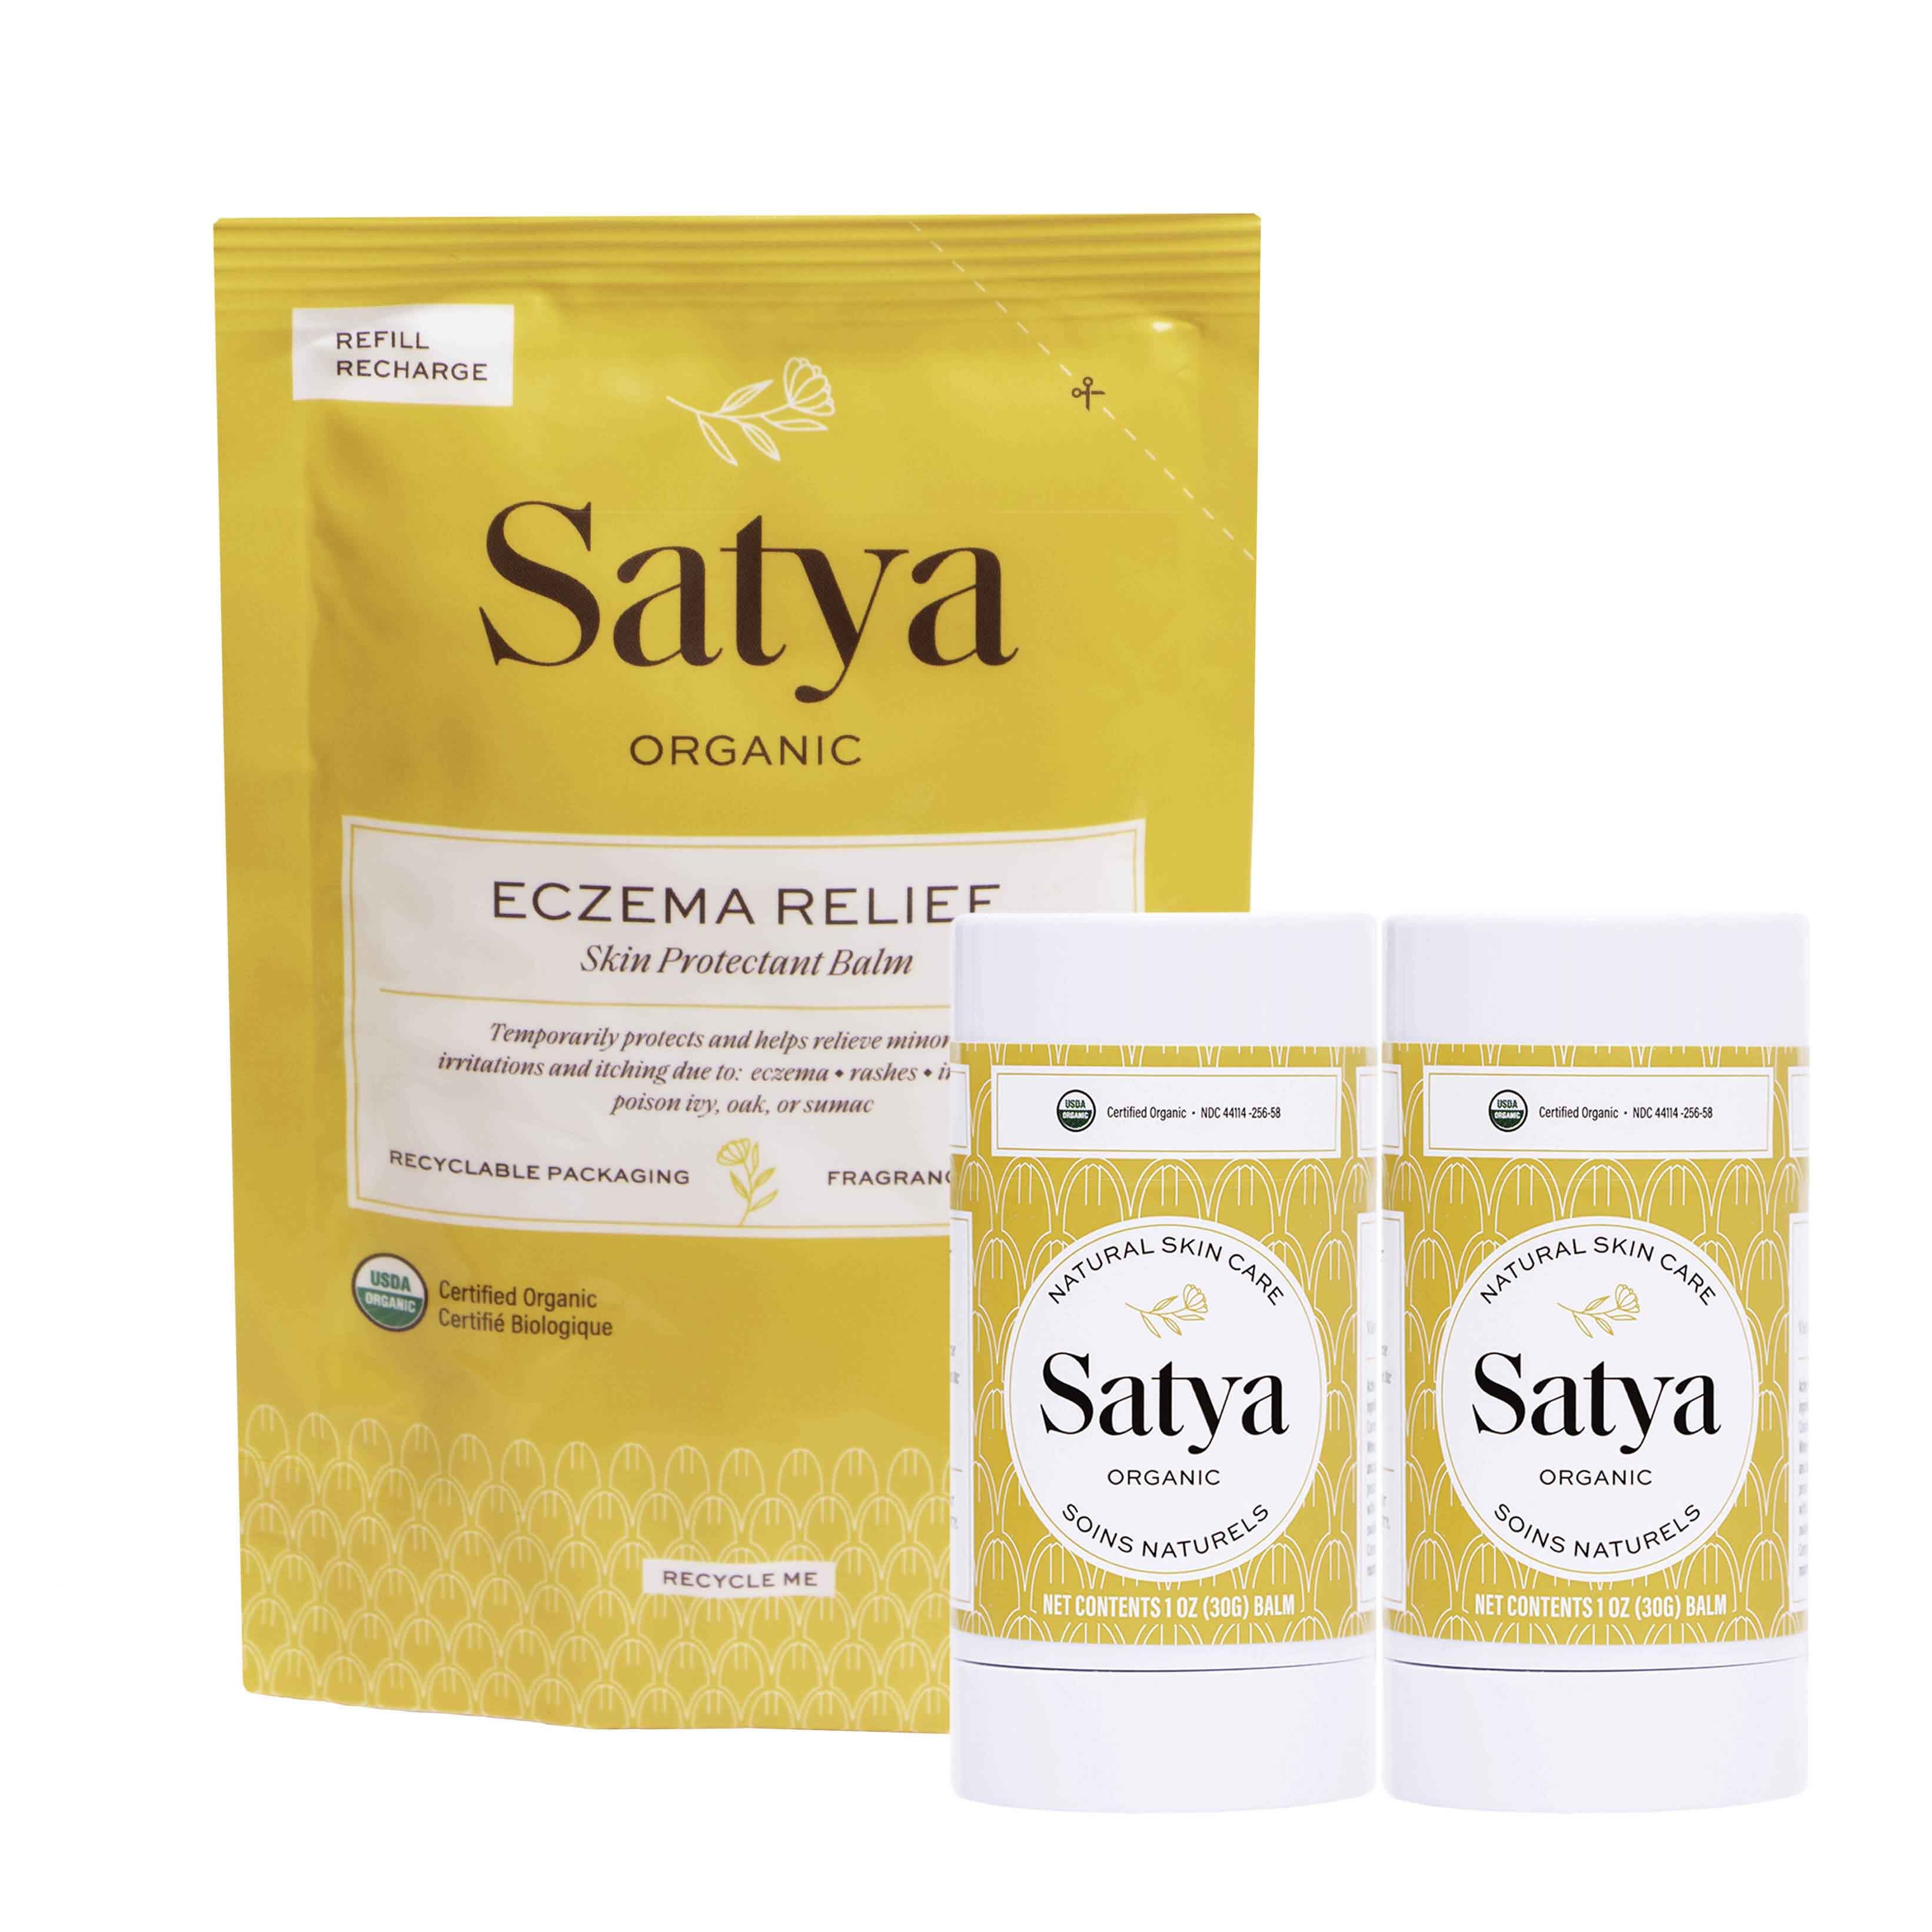 Satya Organic Eczema Relief Skin Protectant Balm.